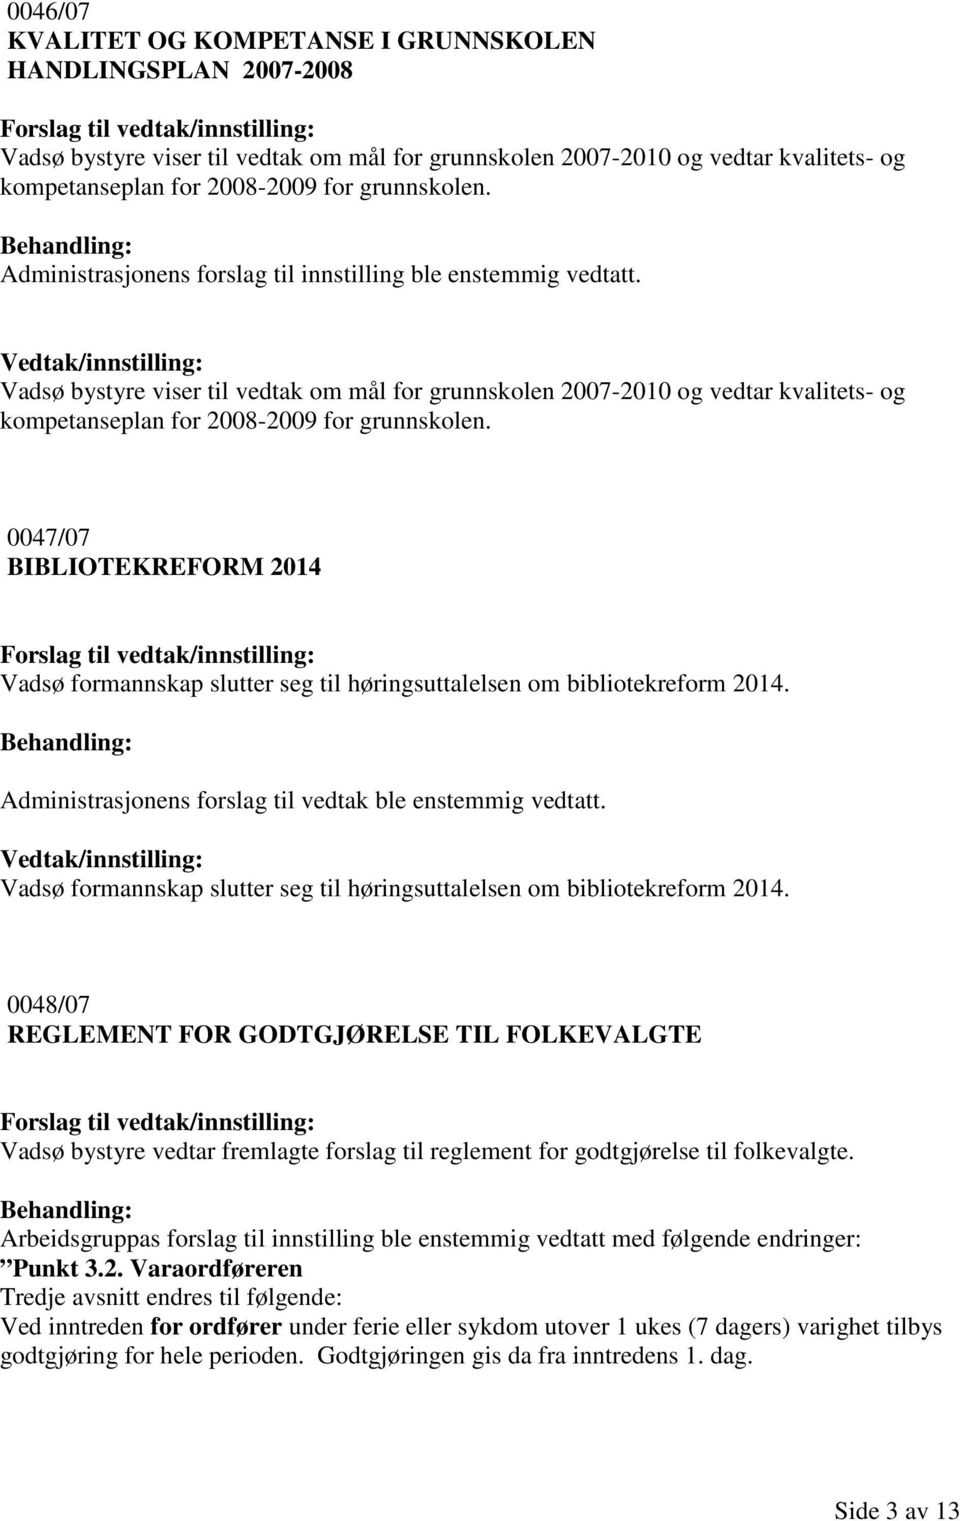 Vadsø bystyre viser til vedtak om mål for grunnskolen 2007-2010 og vedtar kvalitets- og kompetanseplan for 2008-2009 for grunnskolen.